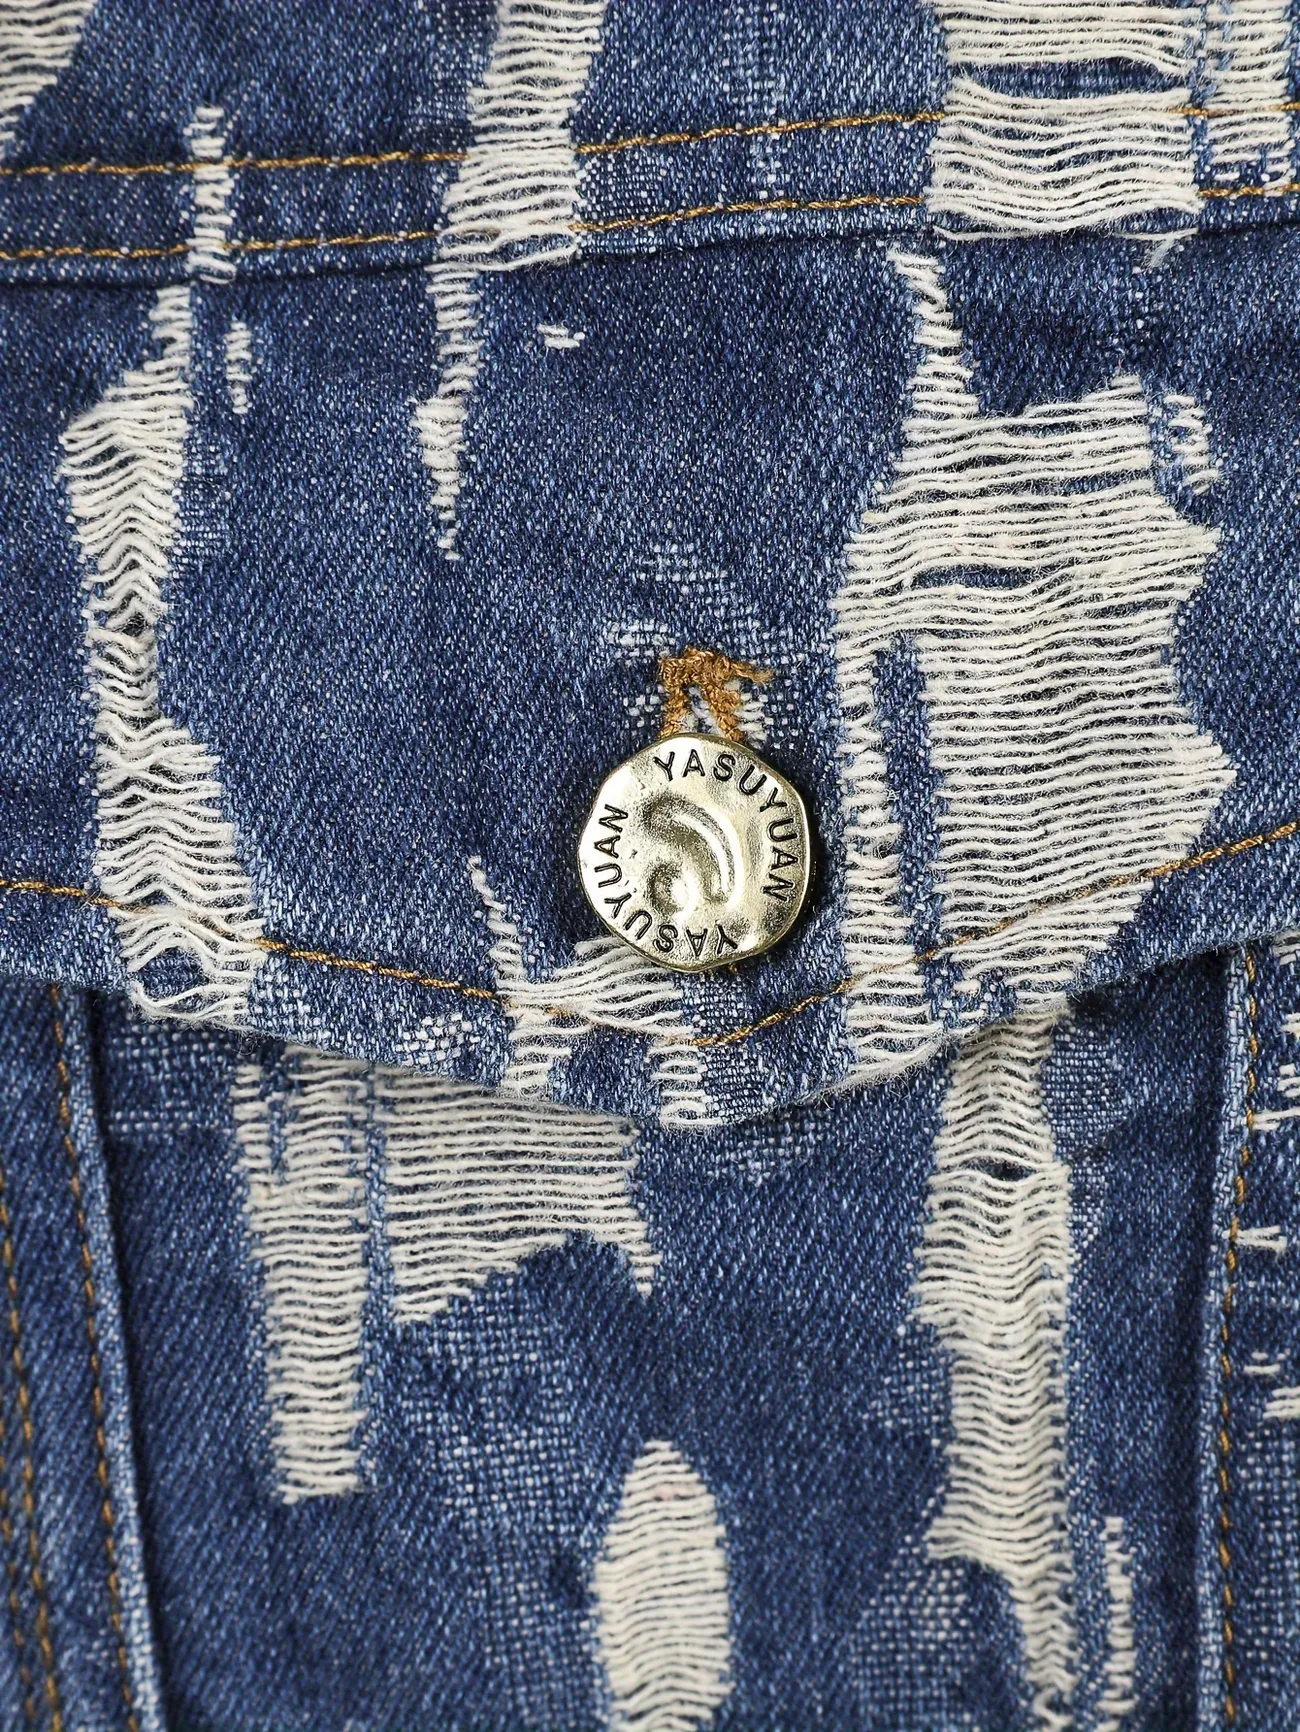 Jacquard Weave Denim Jacket, Men's Casual Street Style Chic Button